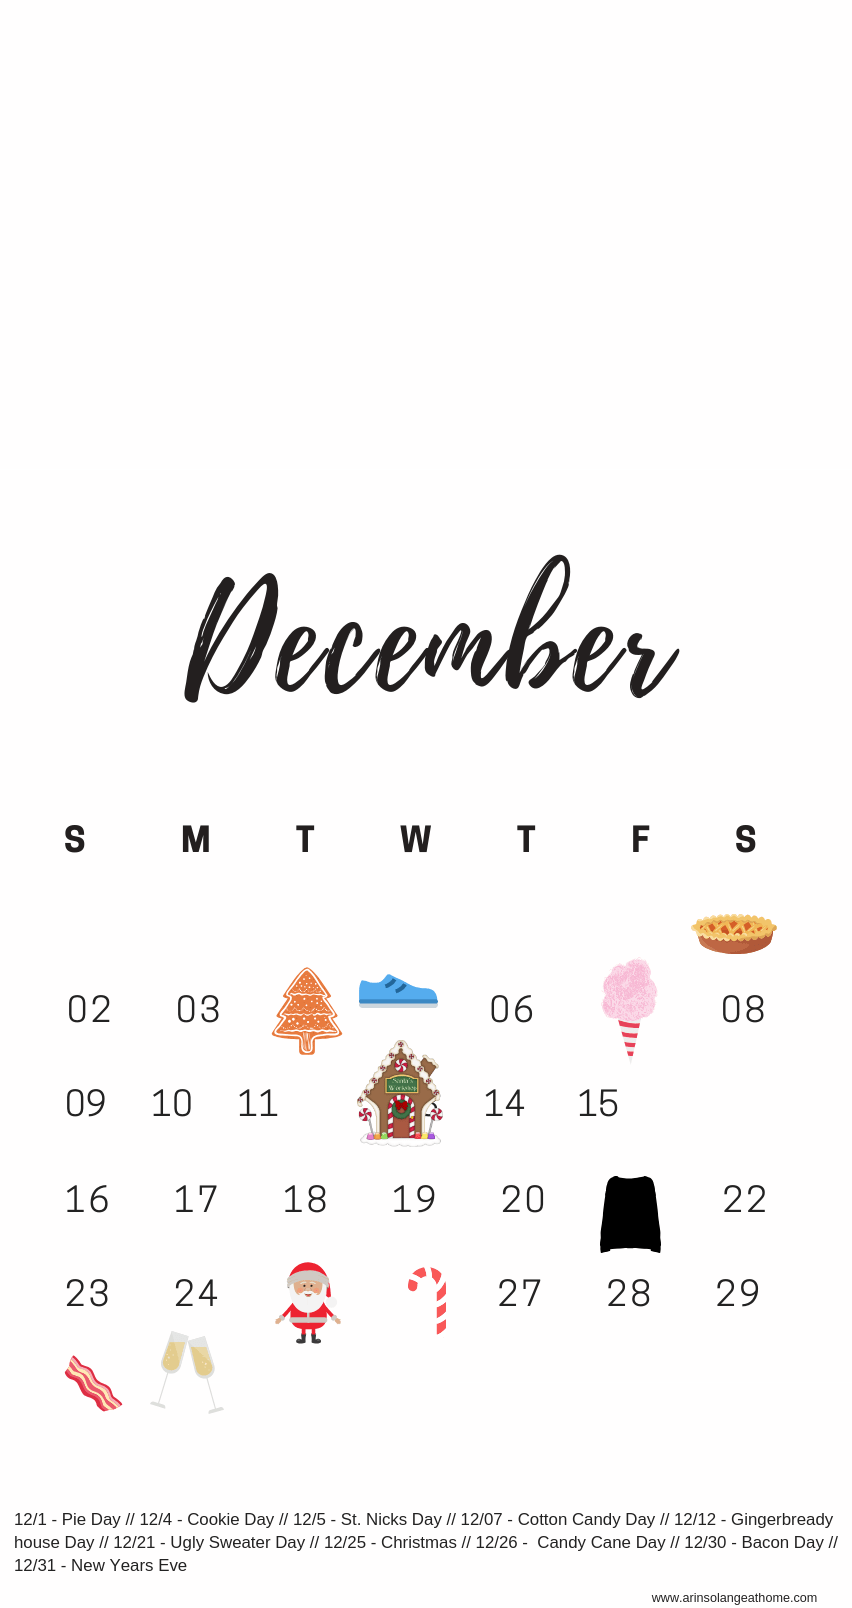 December National Days Calendar. Holiday iphone wallpaper